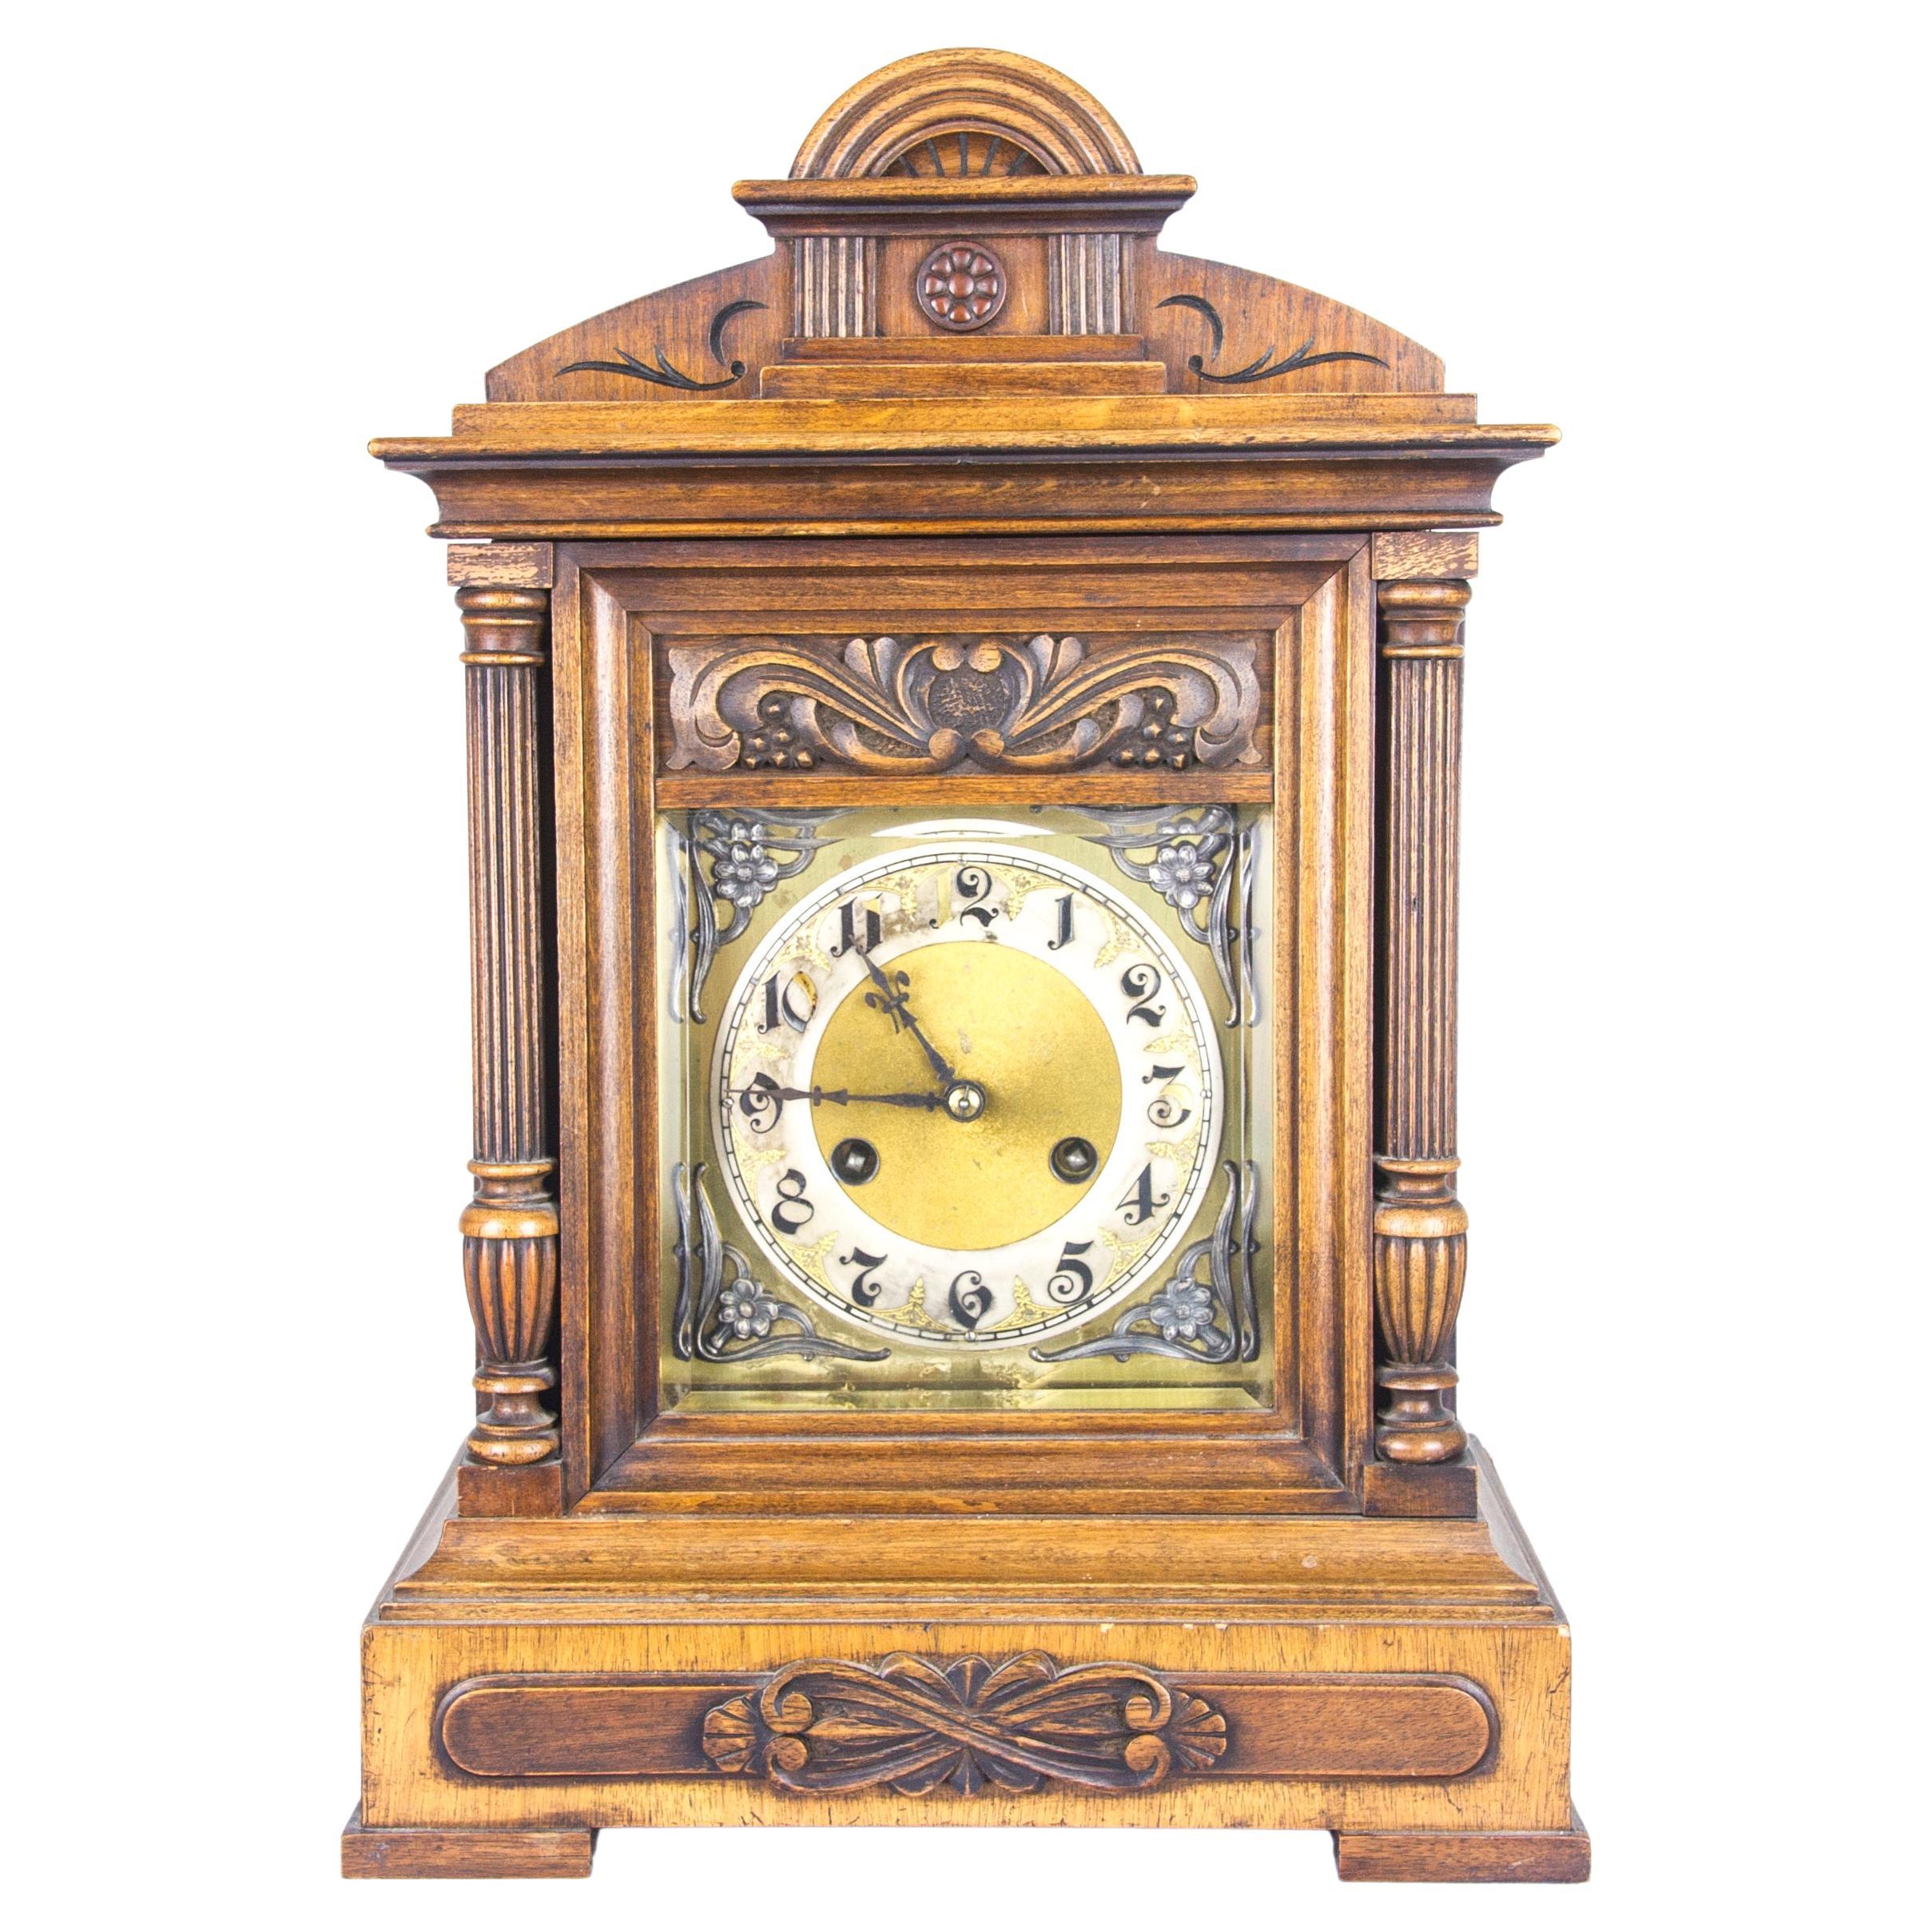 Mantel Clock, Bracket clock, Walnut Cased, German 1900, Antique Furniture, H491